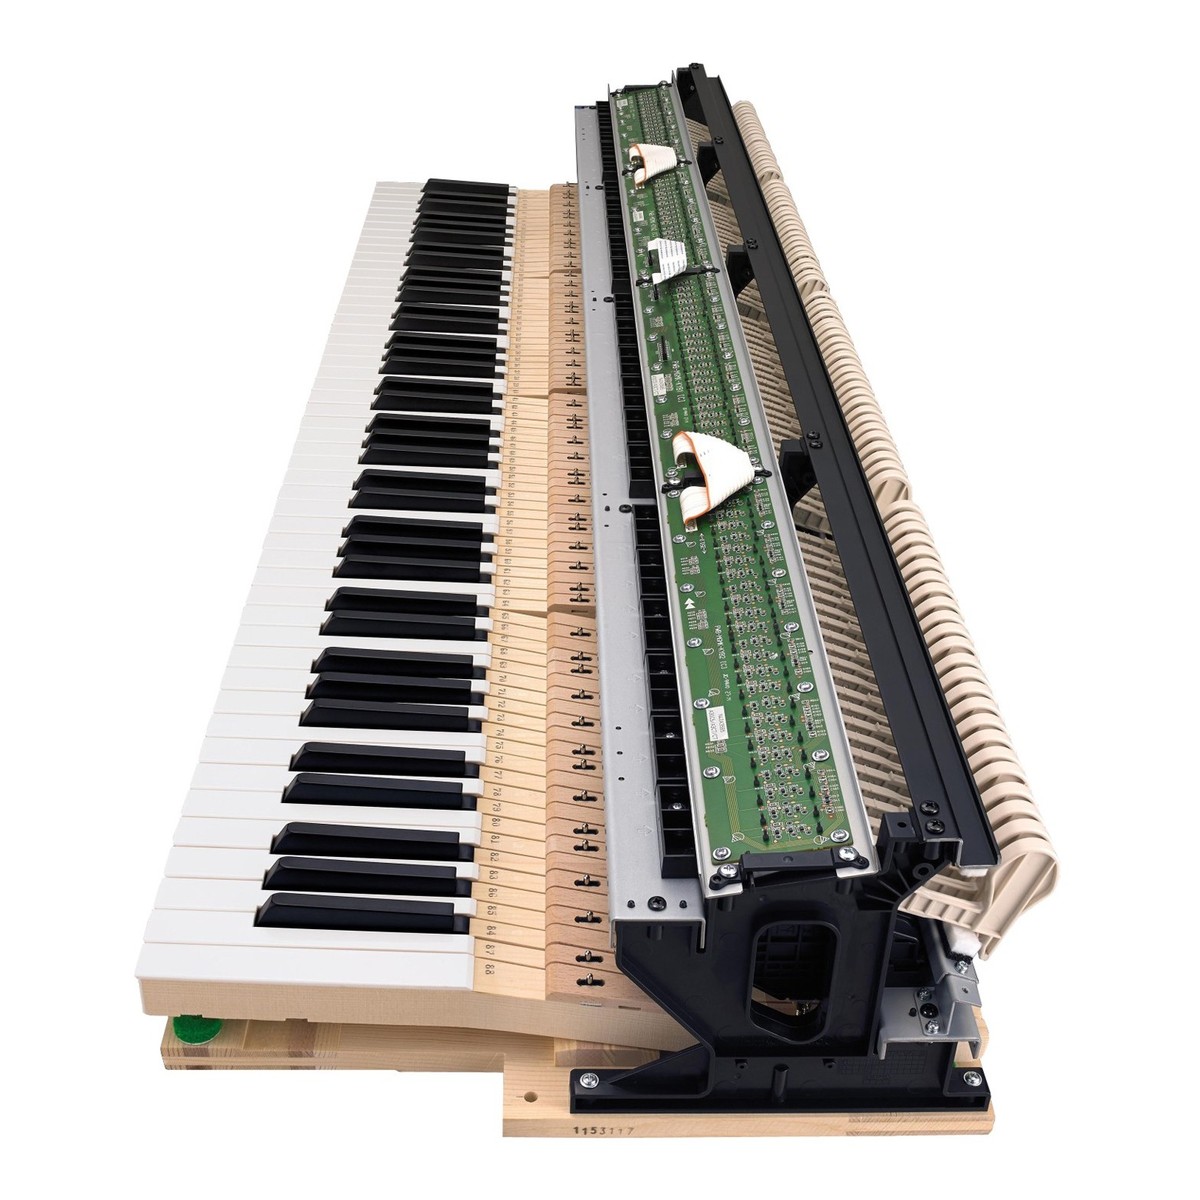 Casio GP-300WE Grand Hybrid Piano key cross section